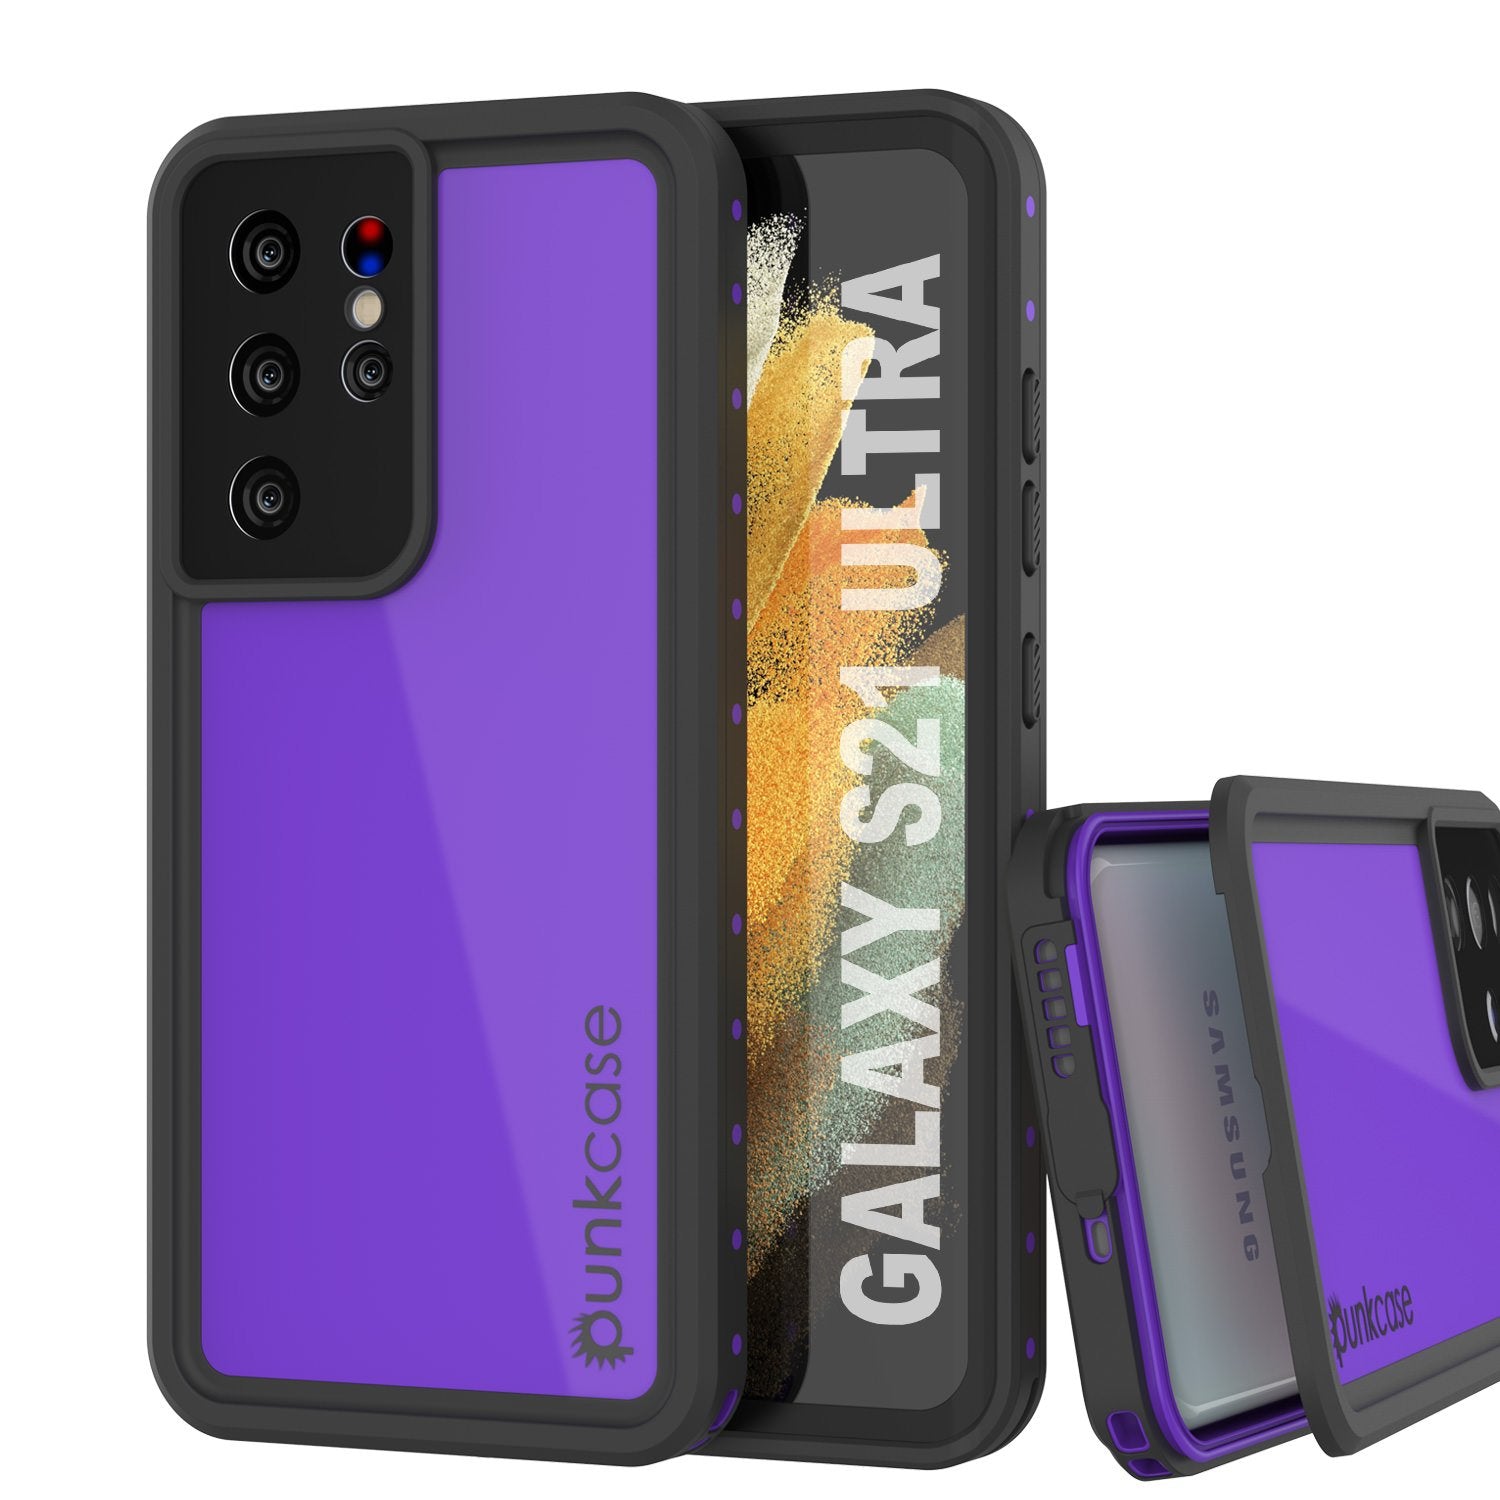 Galaxy S21 Ultra Waterproof Case PunkCase StudStar Purple Thin 6.6ft Underwater IP68 Shock/Snow Proof (Color in image: purple)